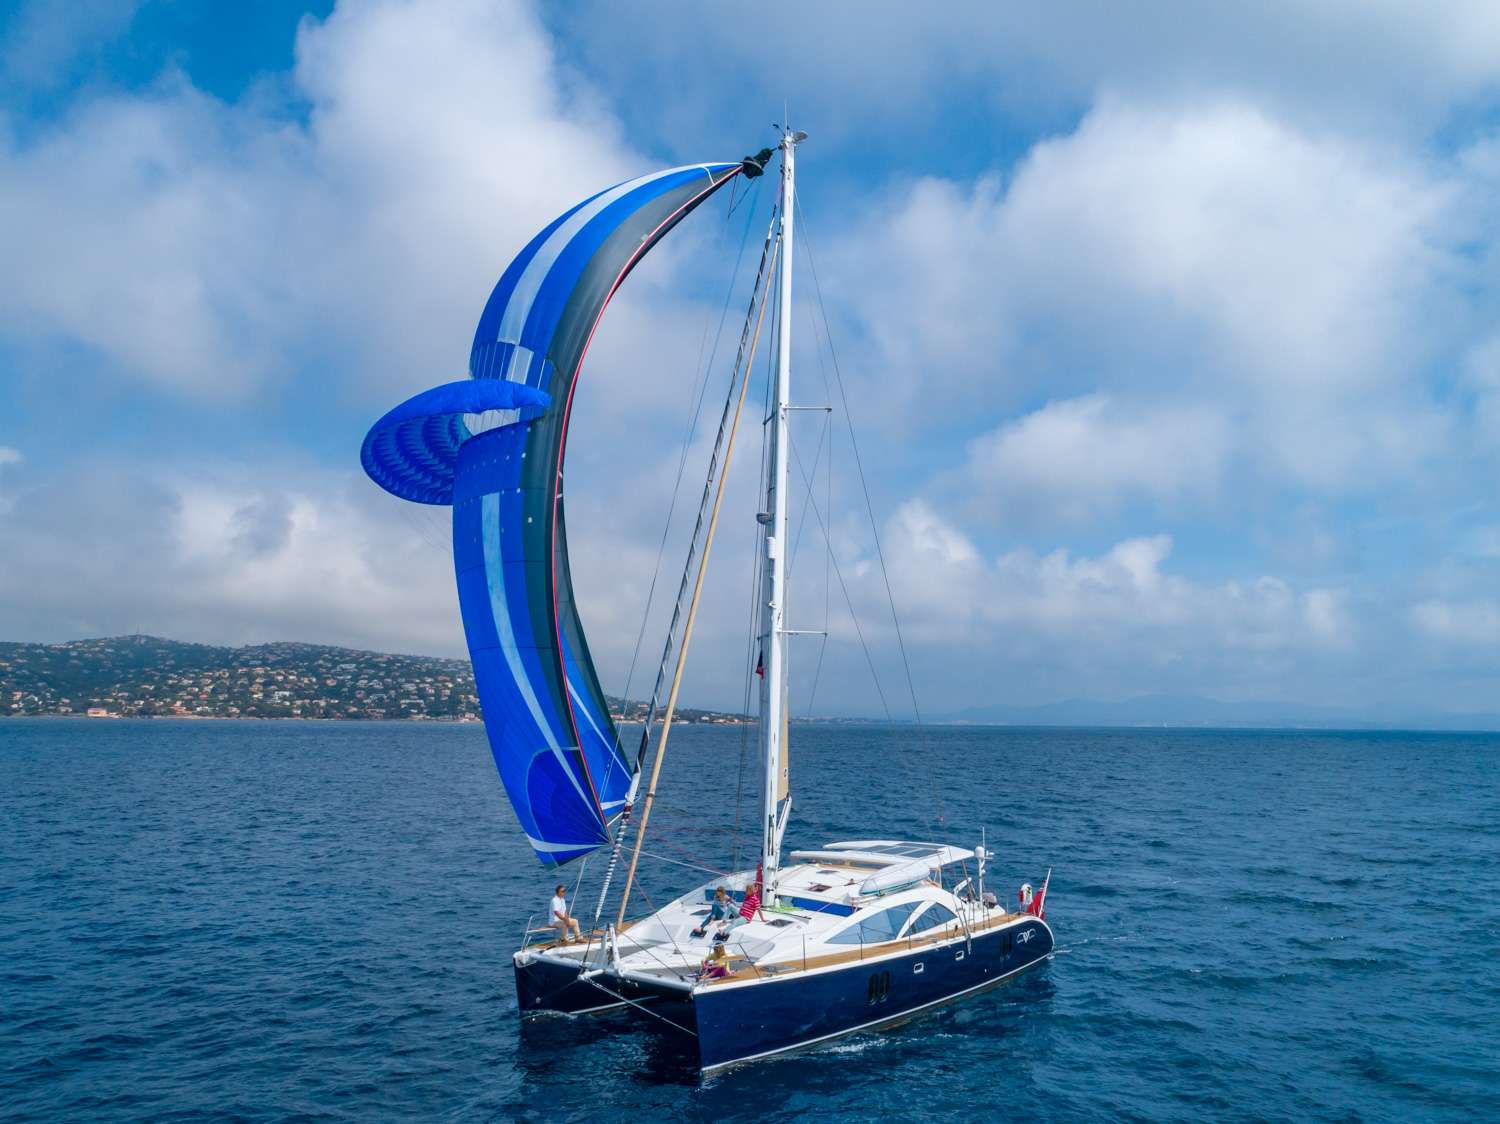 curanta cridhe - Yacht Charter Sorrento & Boat hire in Fr. Riviera & Tyrrhenian Sea 1